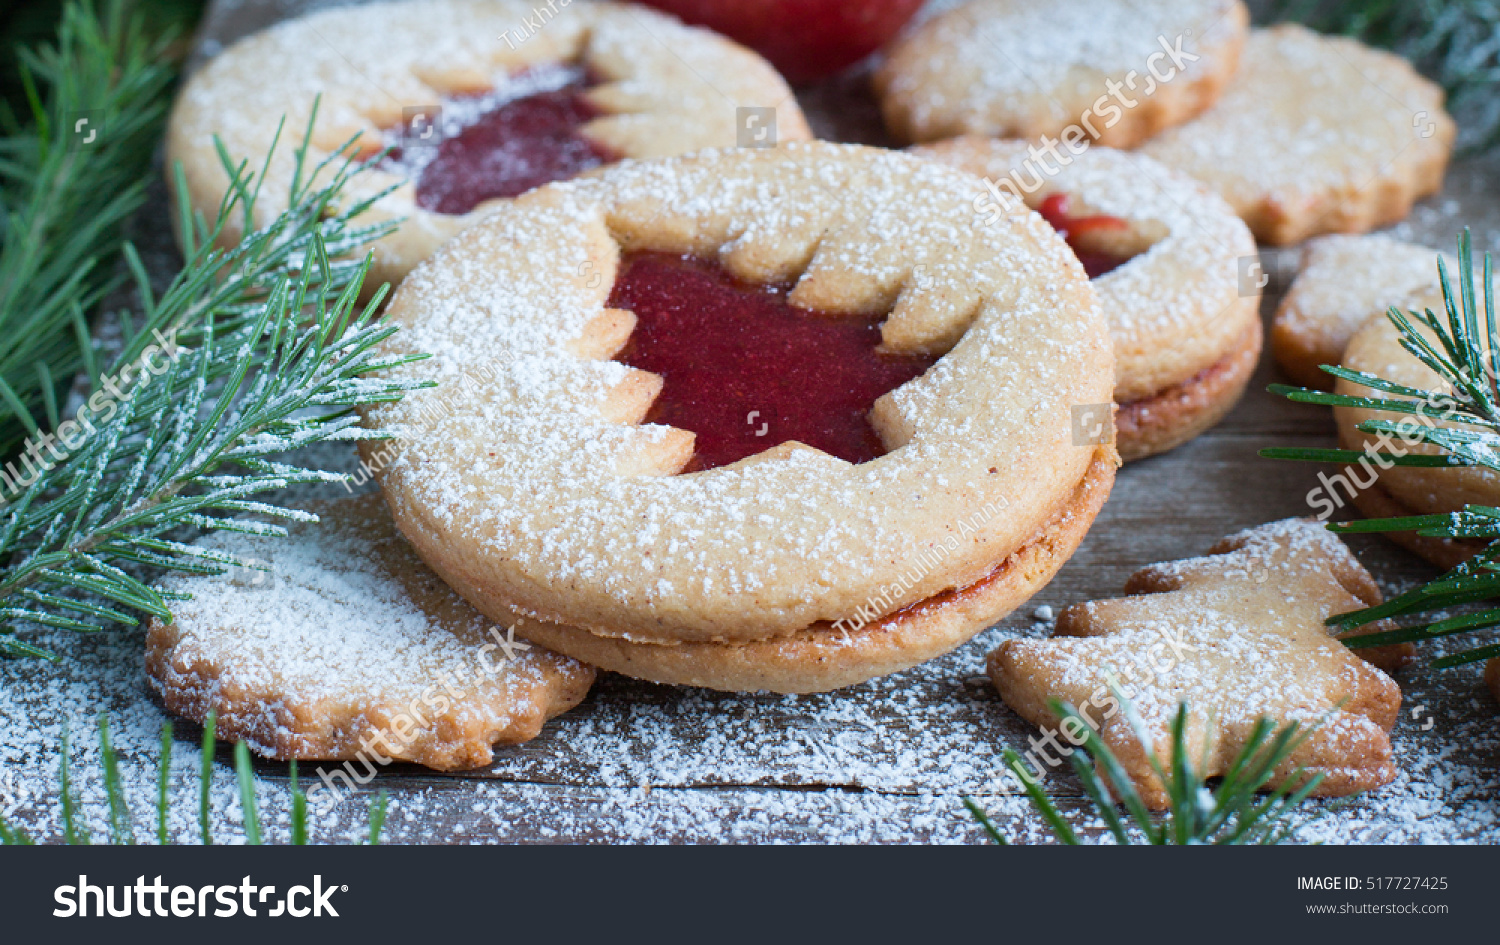 Christmas Baking Homemade Cookies Strawberry Jam Stock Photo Edit Now 517727425